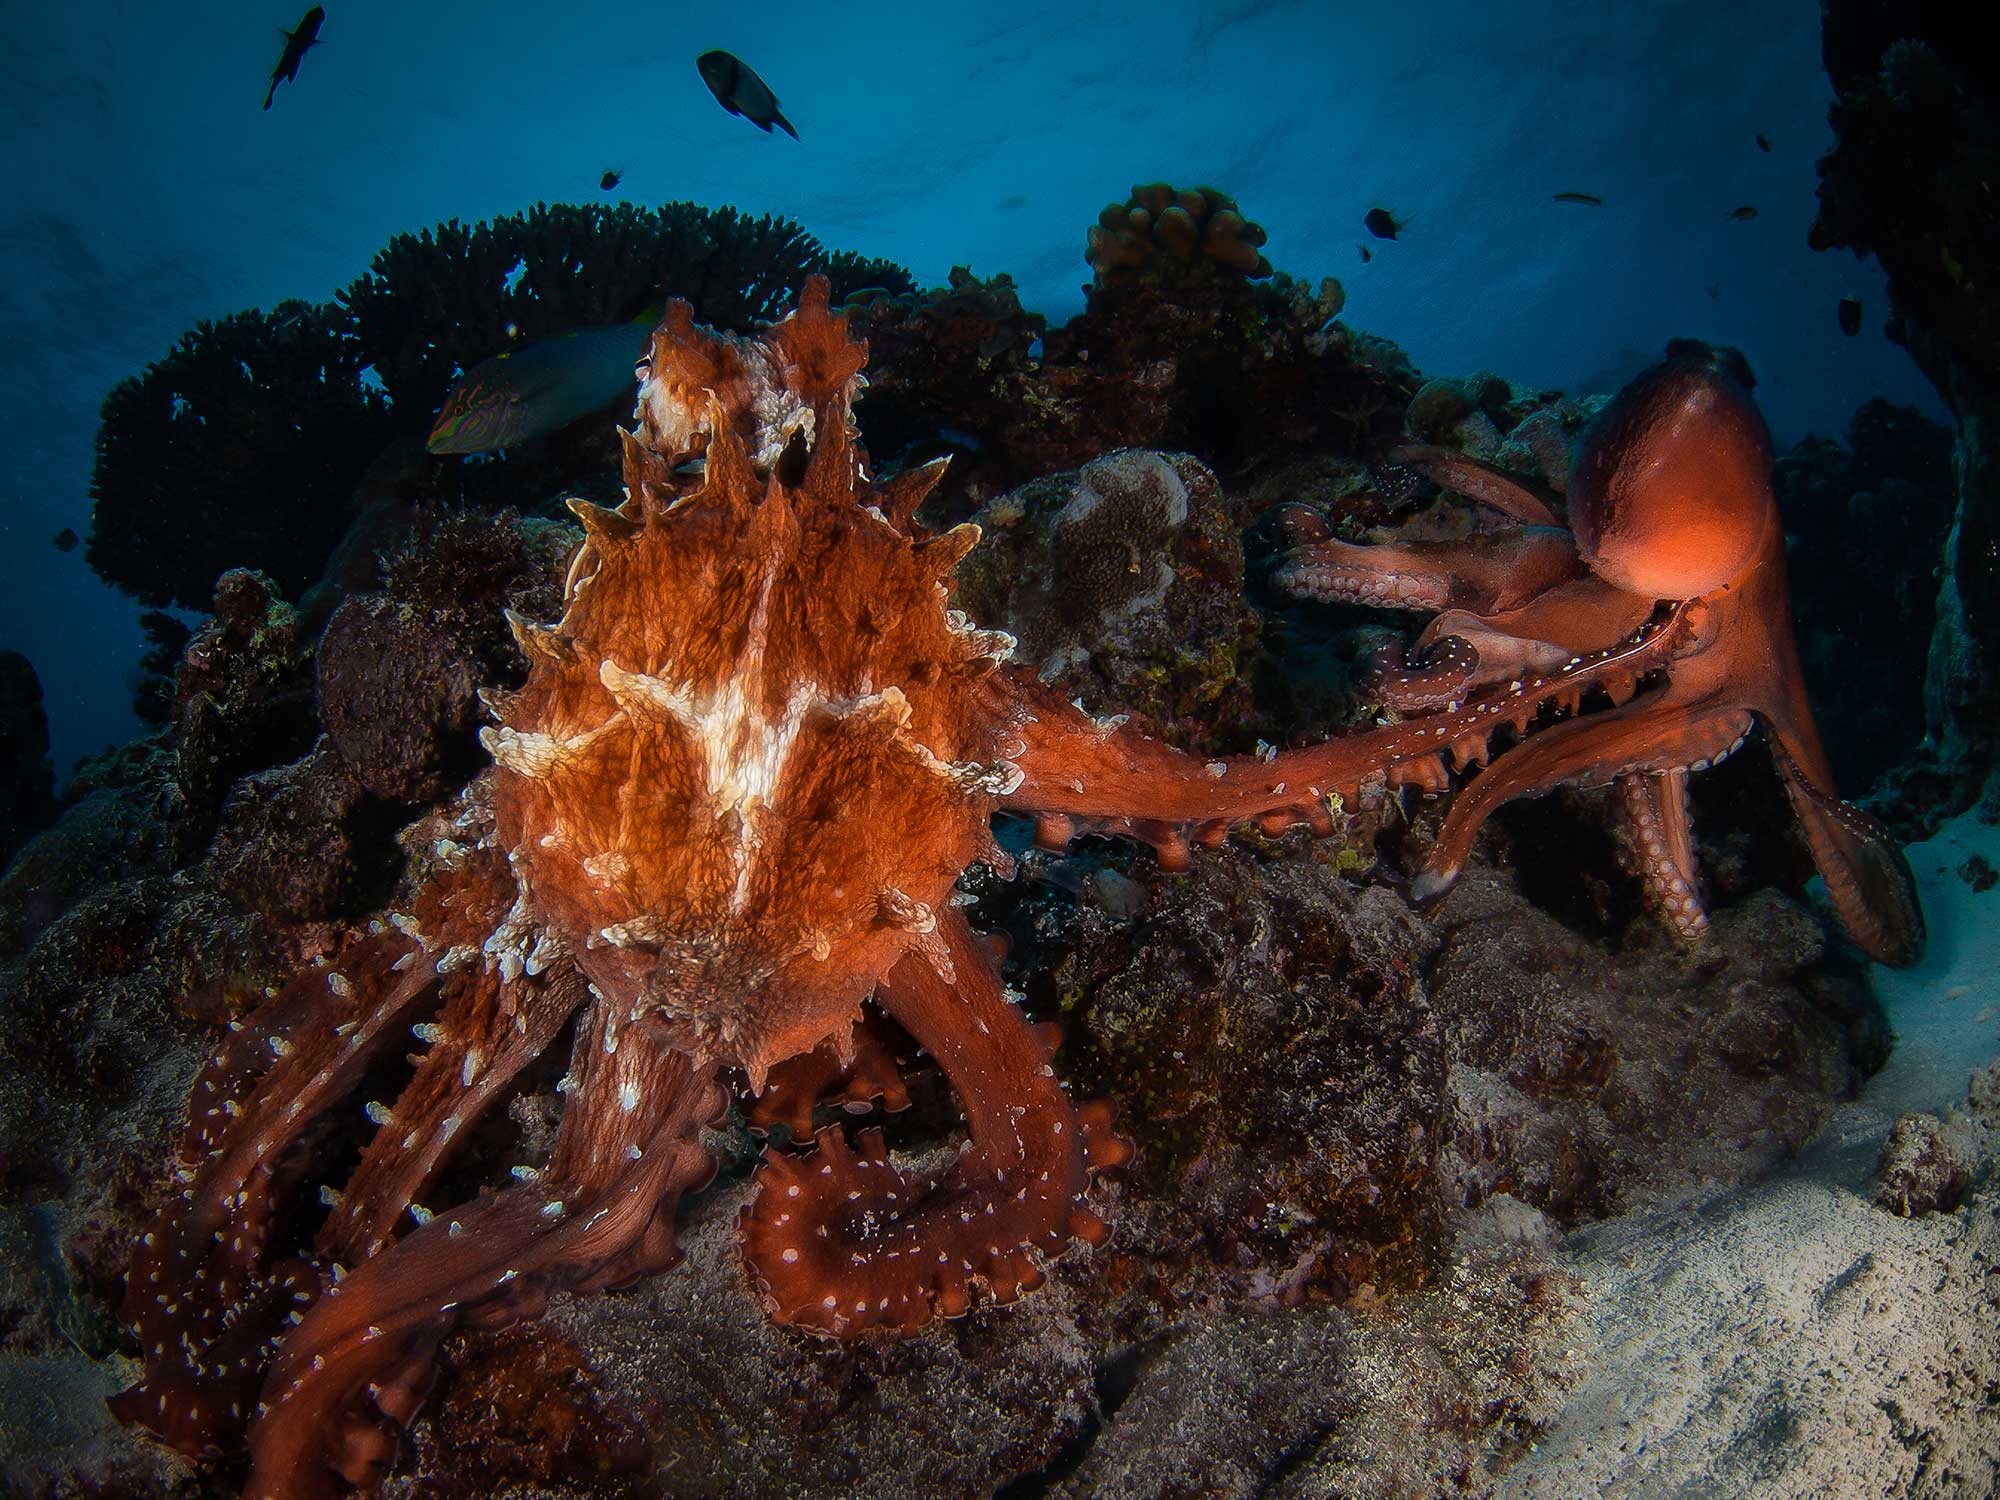 Octopus Underwater Camera Settings and Technique